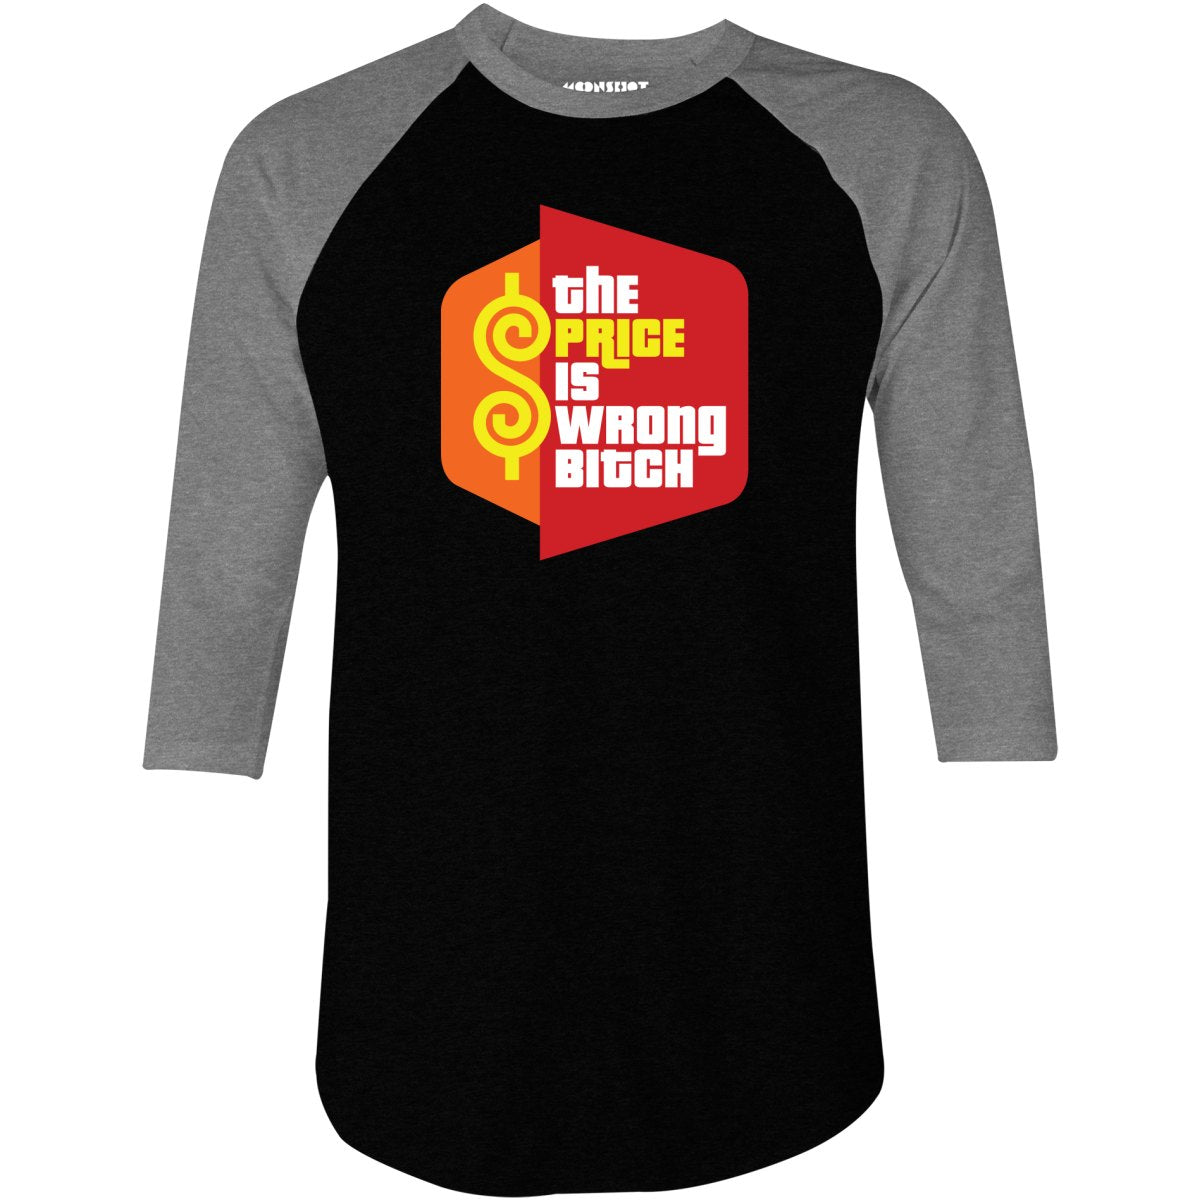 The Price is Wrong Bitch - 3/4 Sleeve Raglan T-Shirt